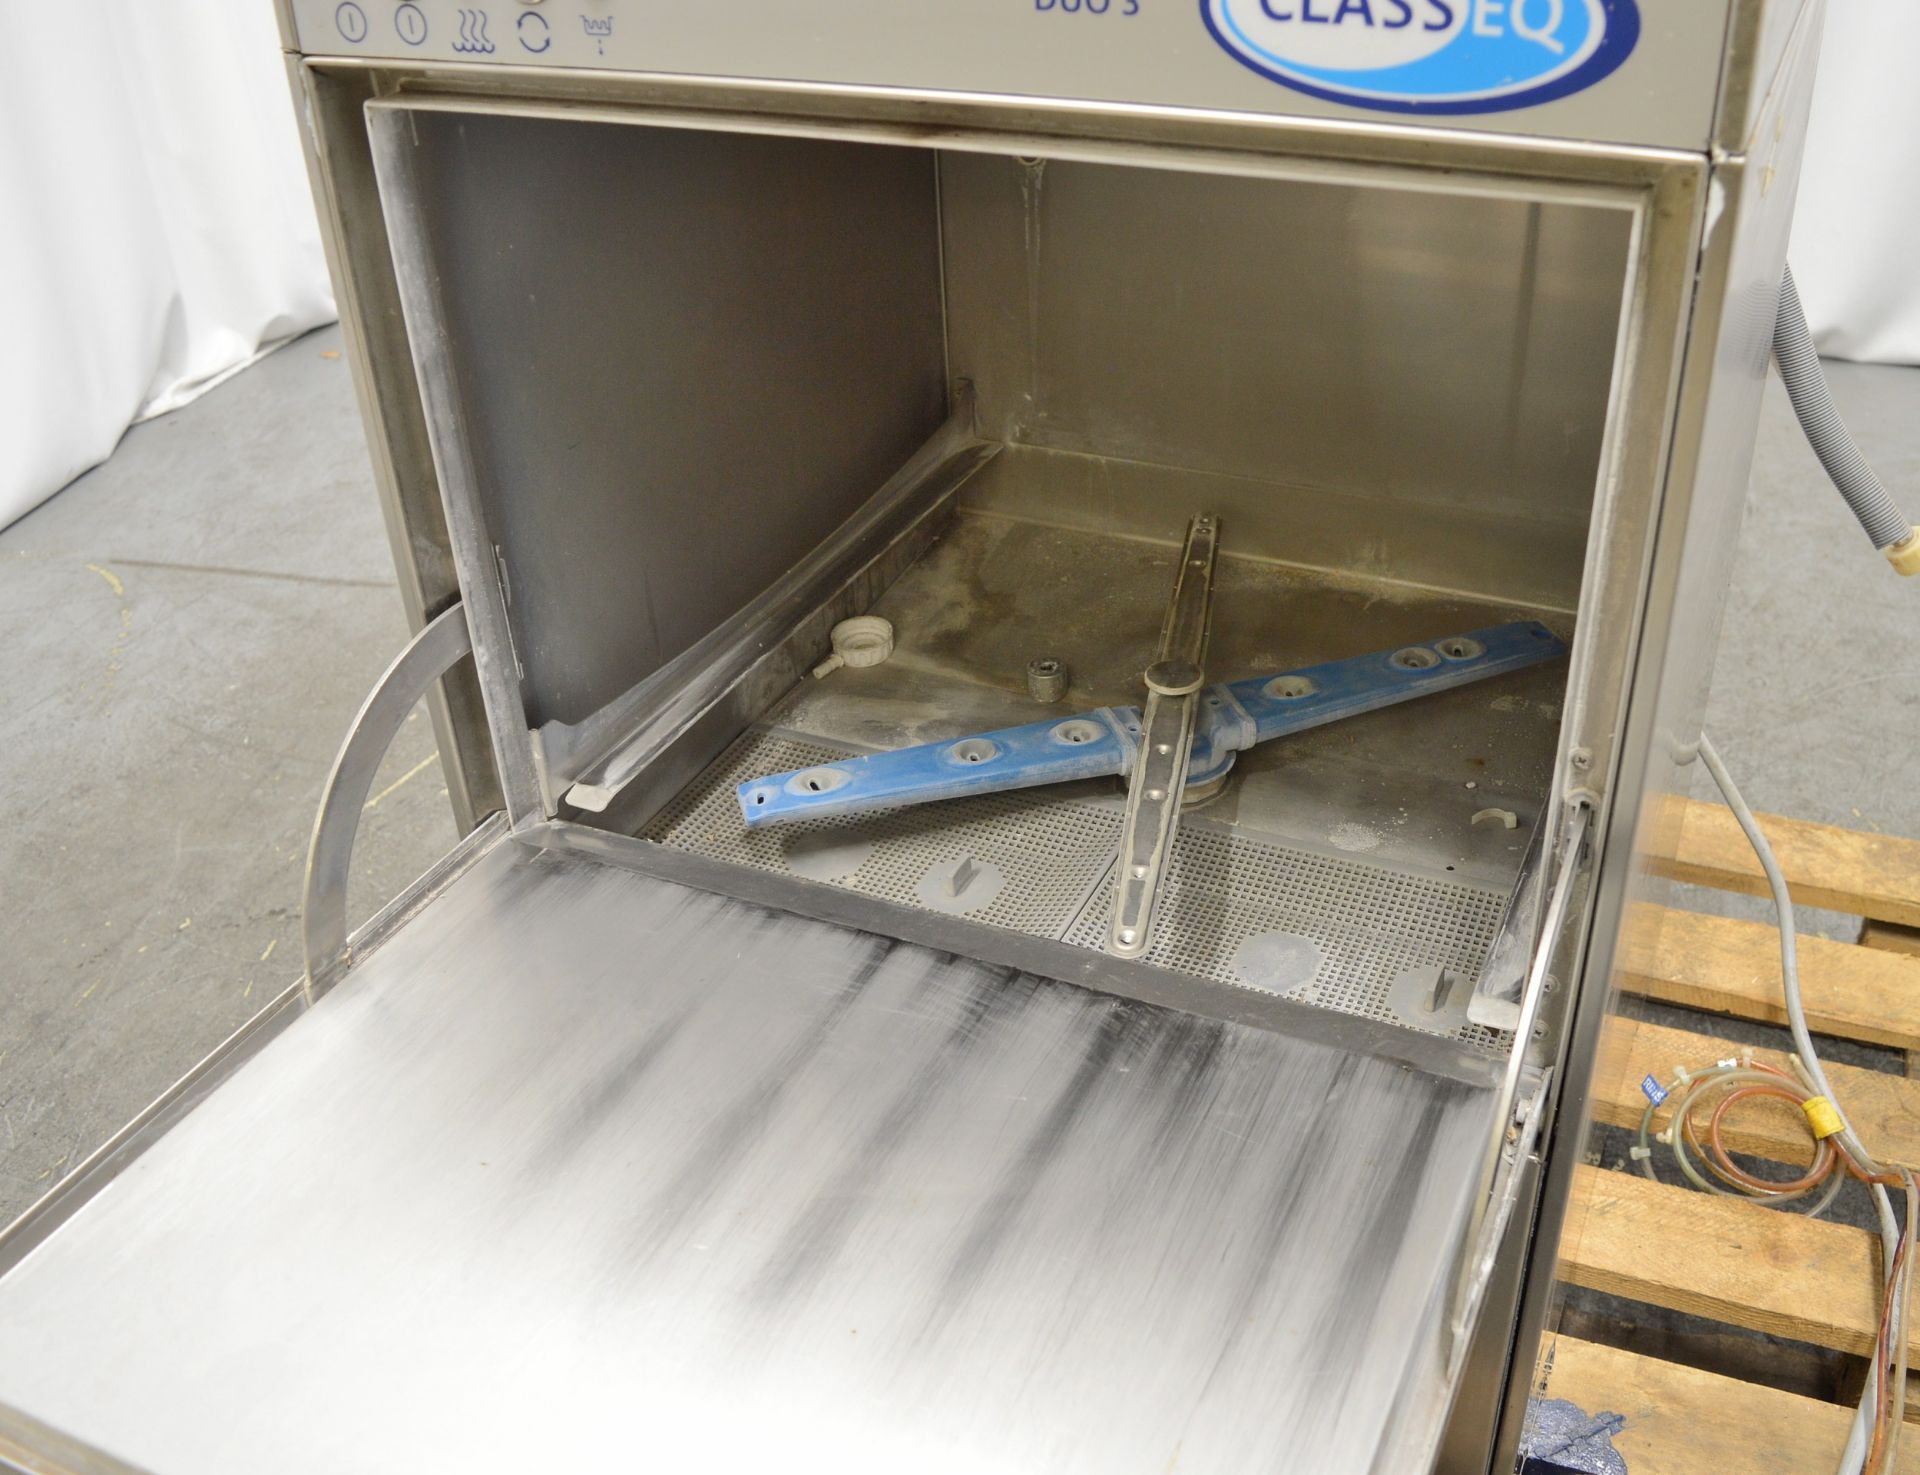 Class EQ DUO308 6.9kW Dishwasher. - Image 6 of 7